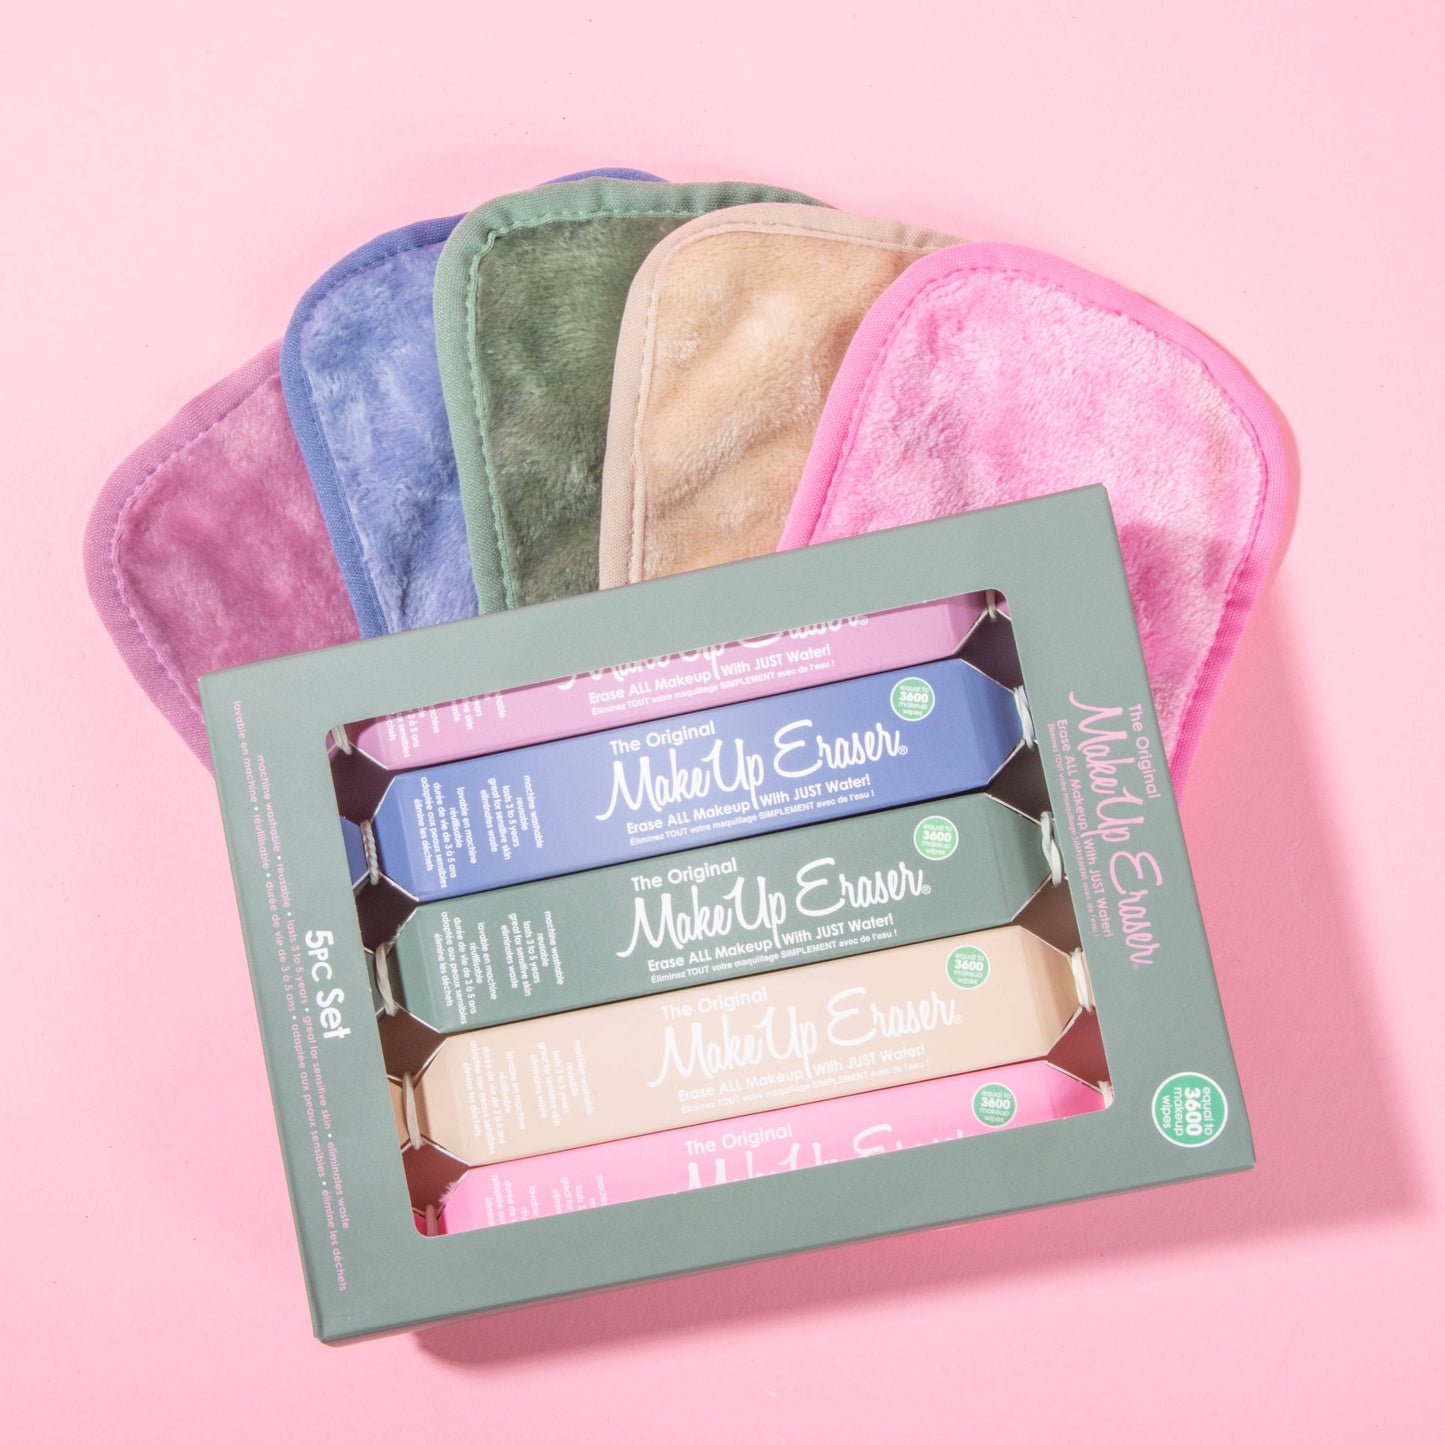 'Tis The Season 5pc Set | MakeUp Eraser Holiday Collection